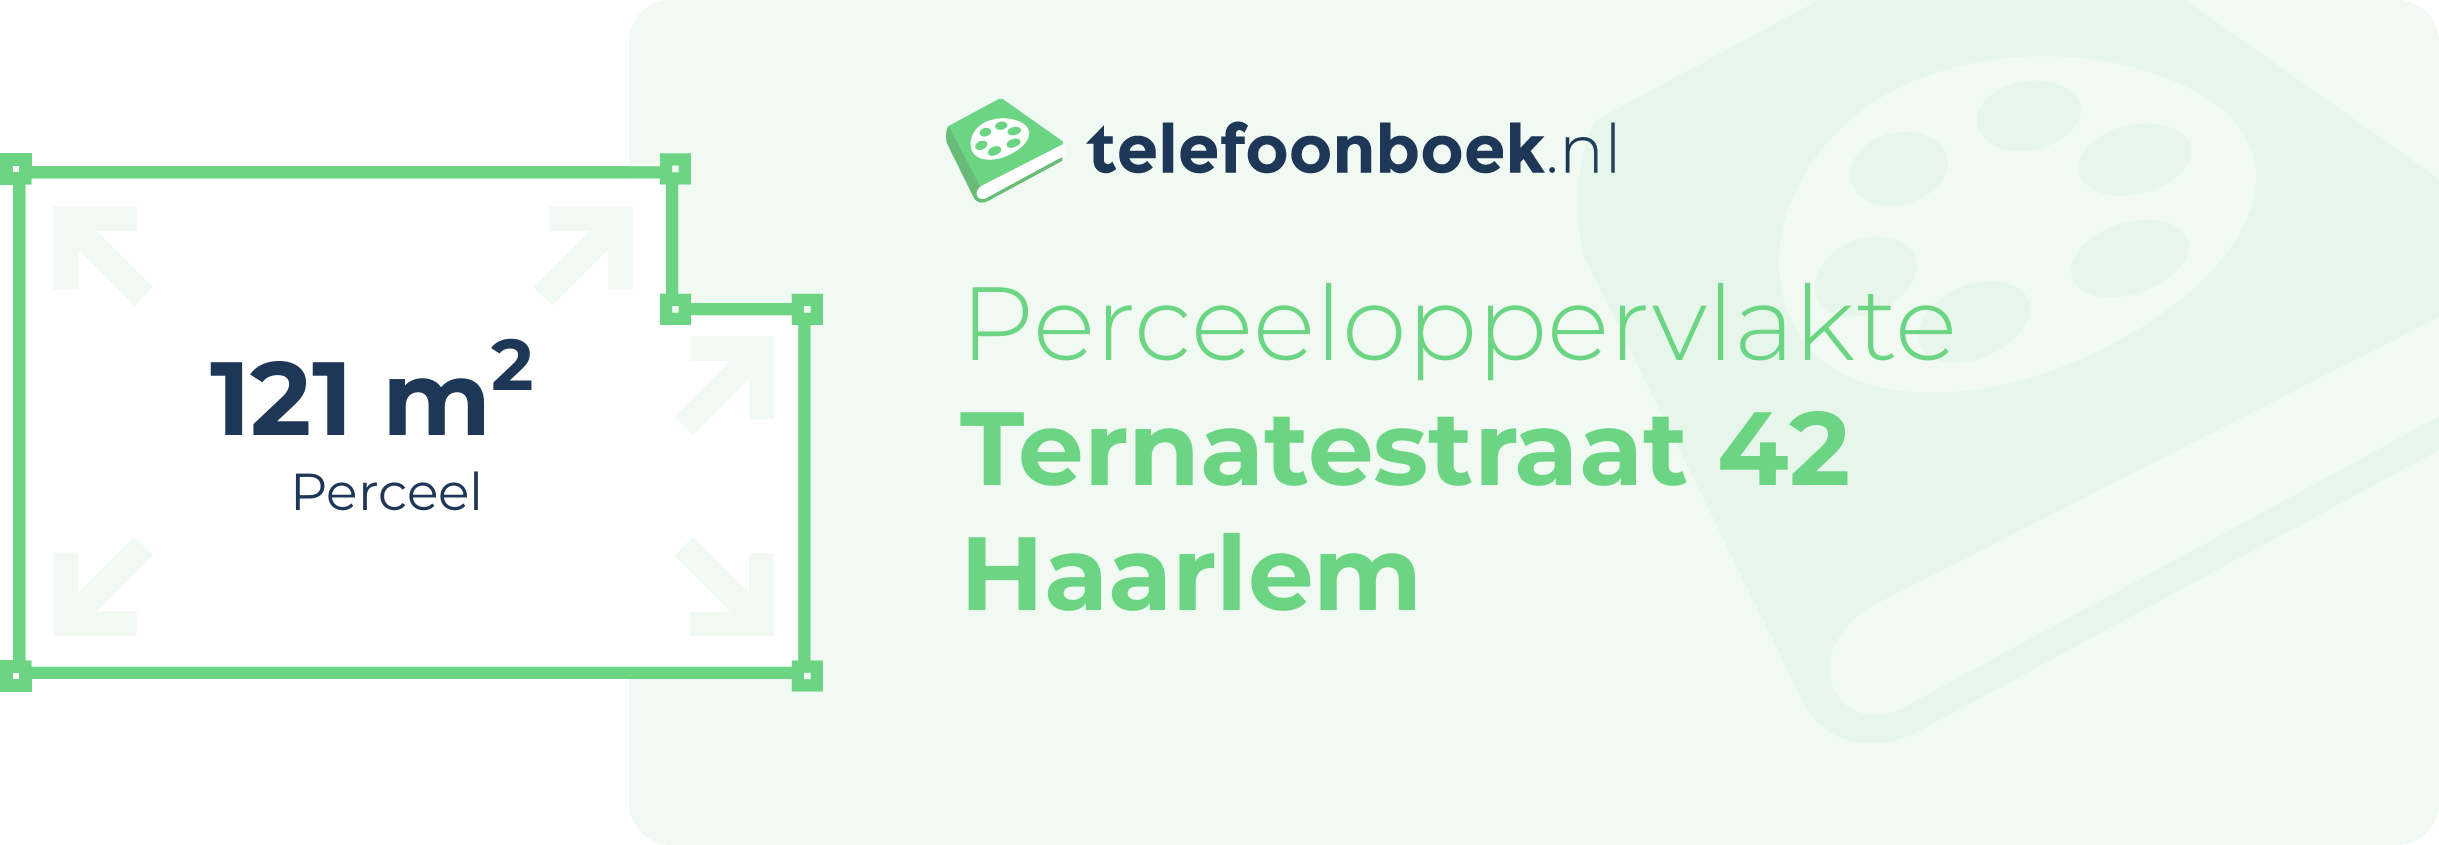 Perceeloppervlakte Ternatestraat 42 Haarlem